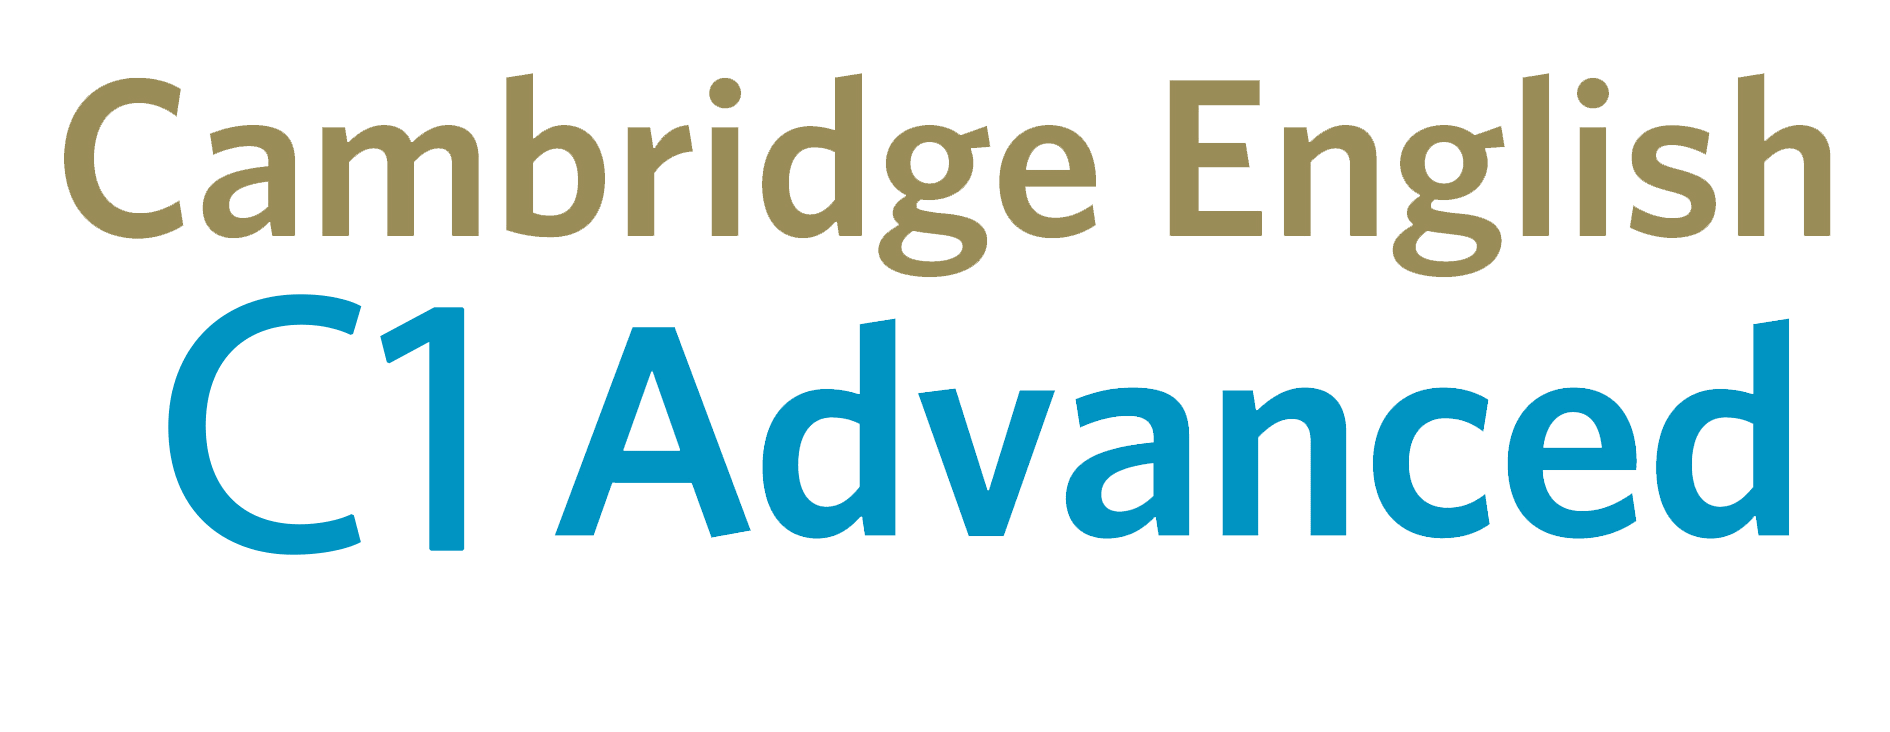 Cabridge English C1 Advanced Gray and Blue Logo